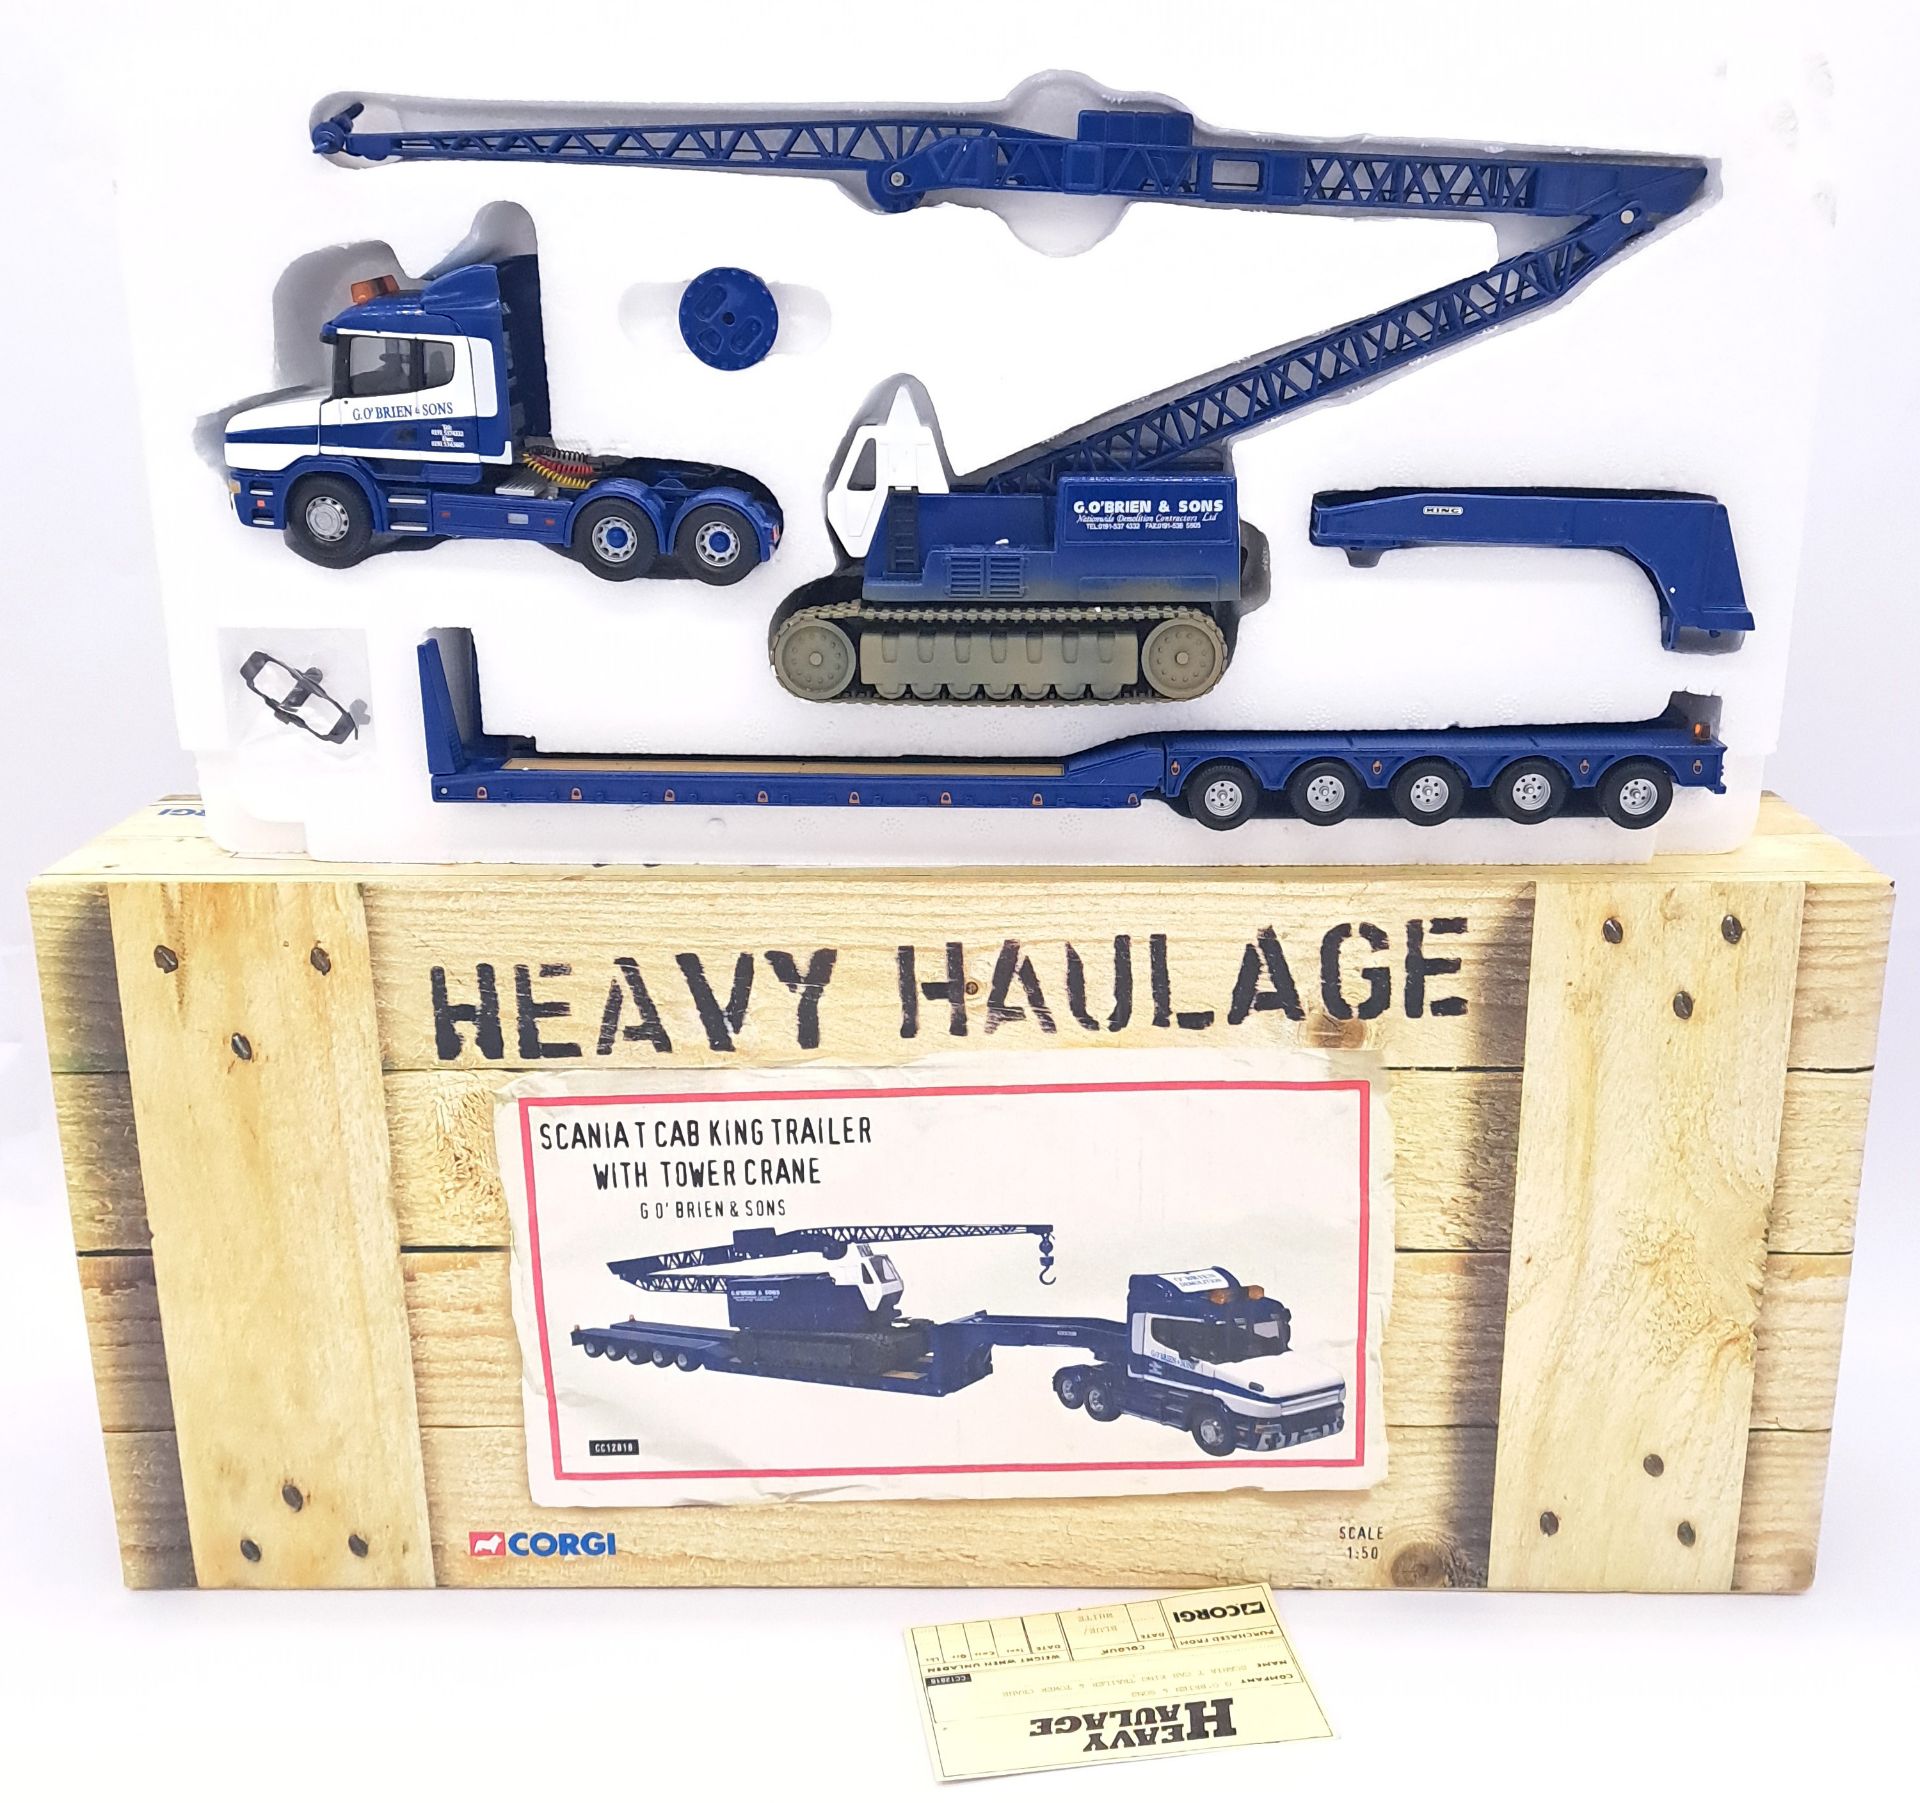 Corgi "Heavy Haulage" a boxed CC12818